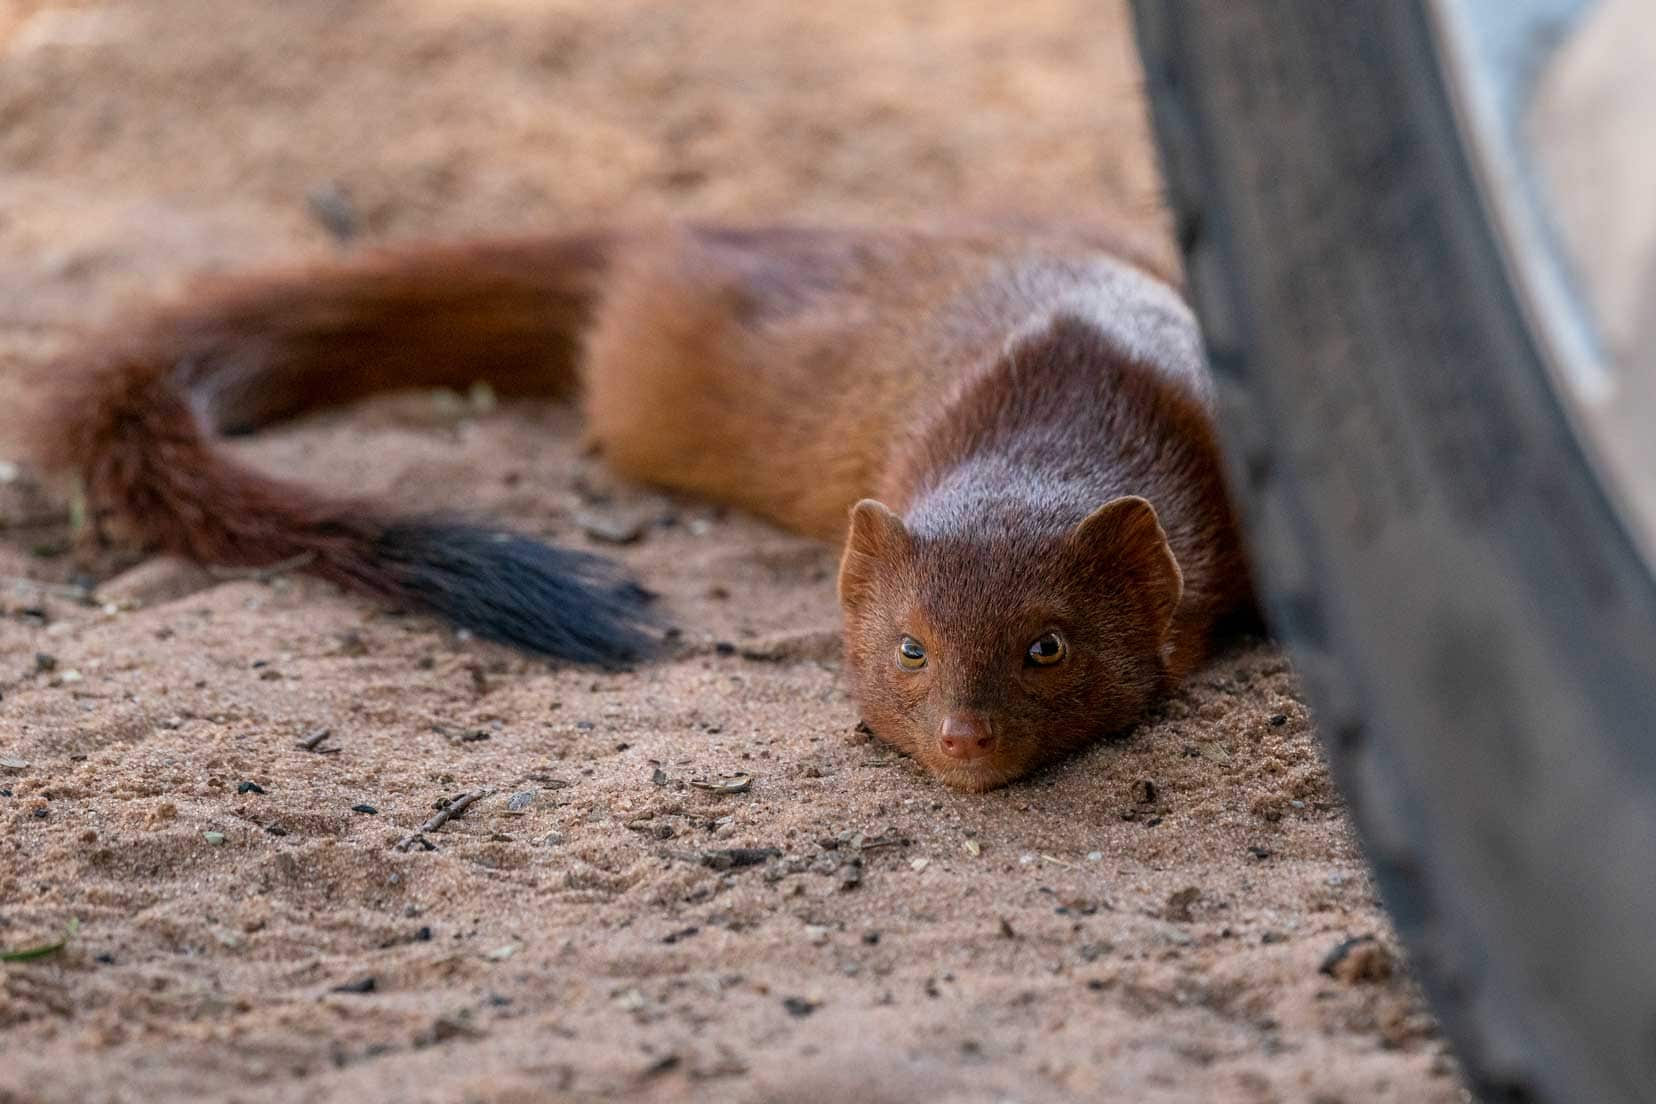 slender-mongoose-under-car-tyre-lying-down